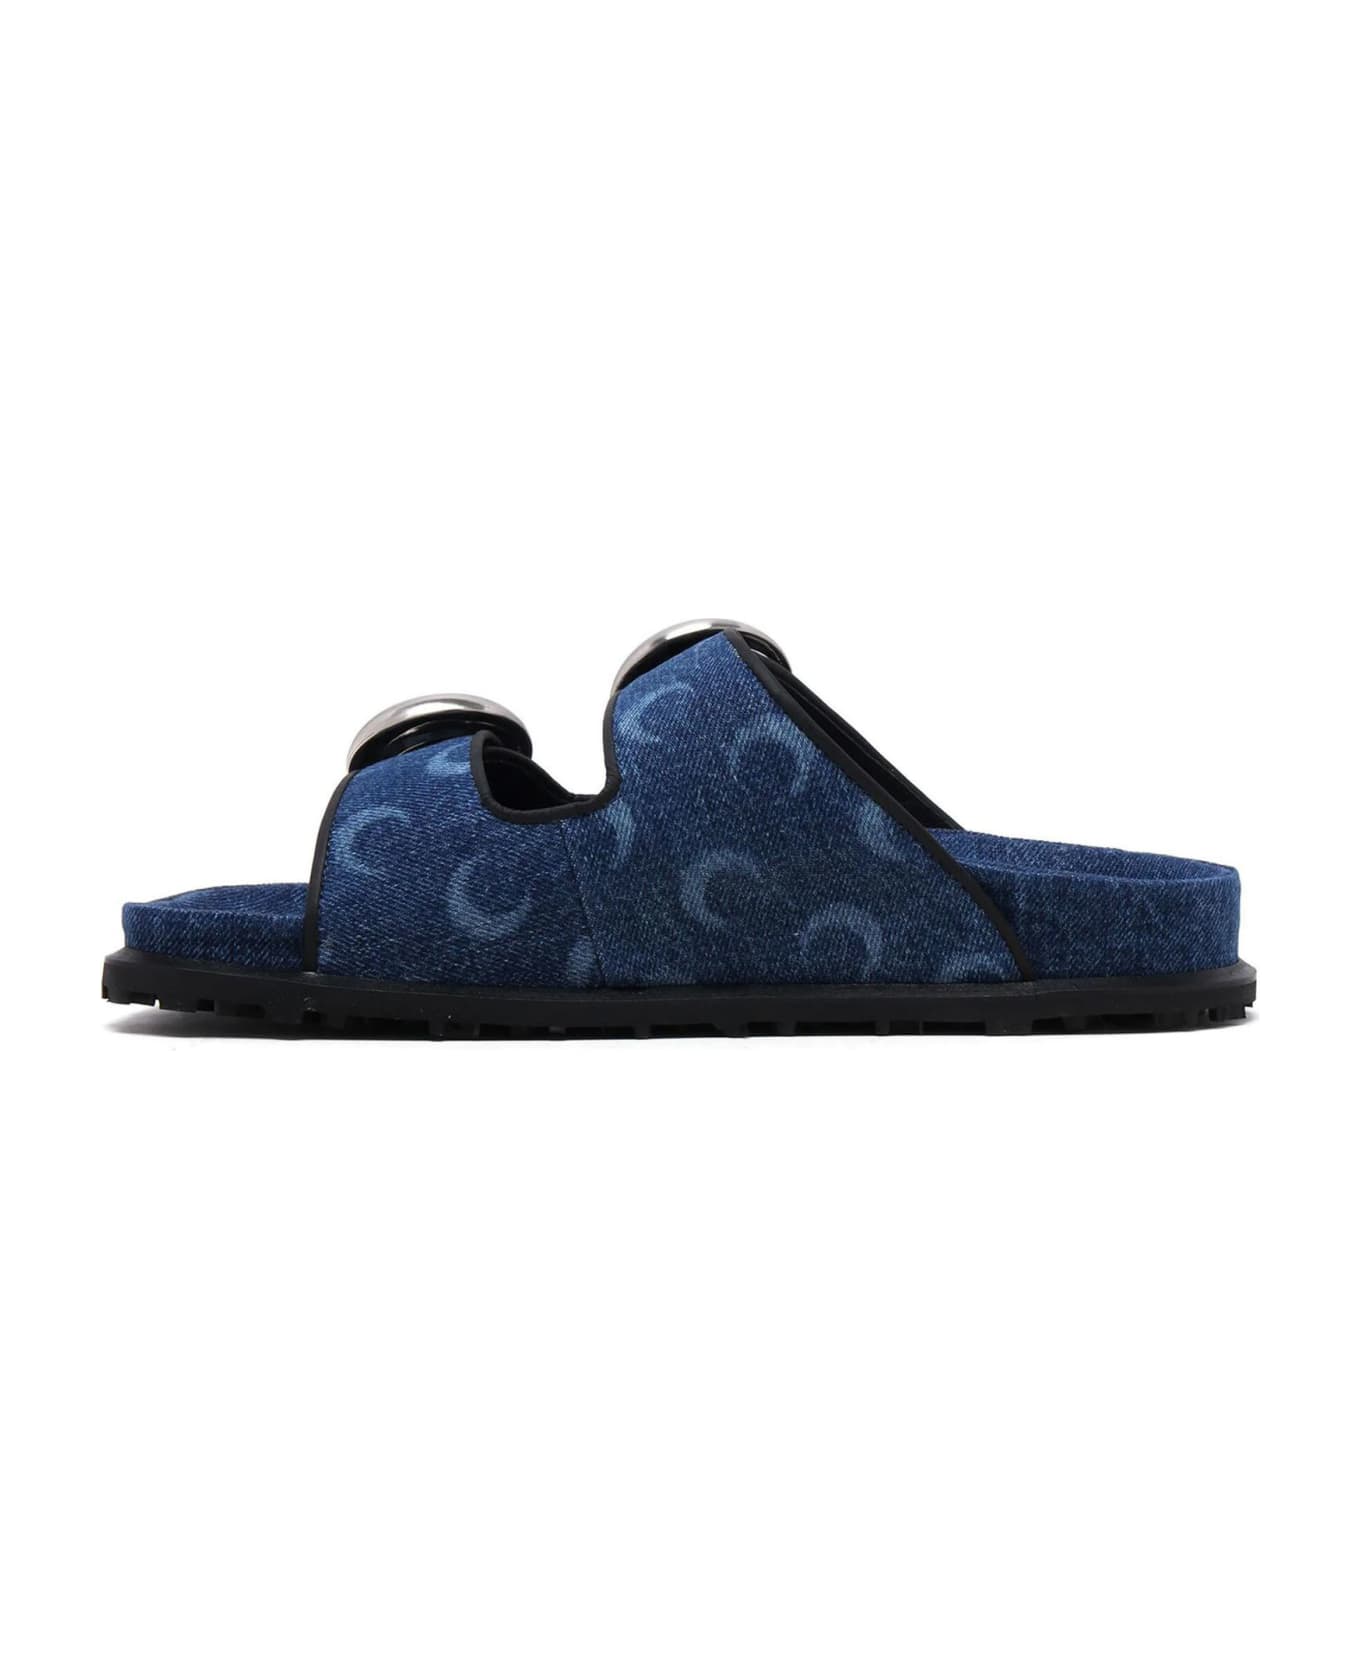 Marine Serre Blue Cotton Denim Sandals - Blue サンダル